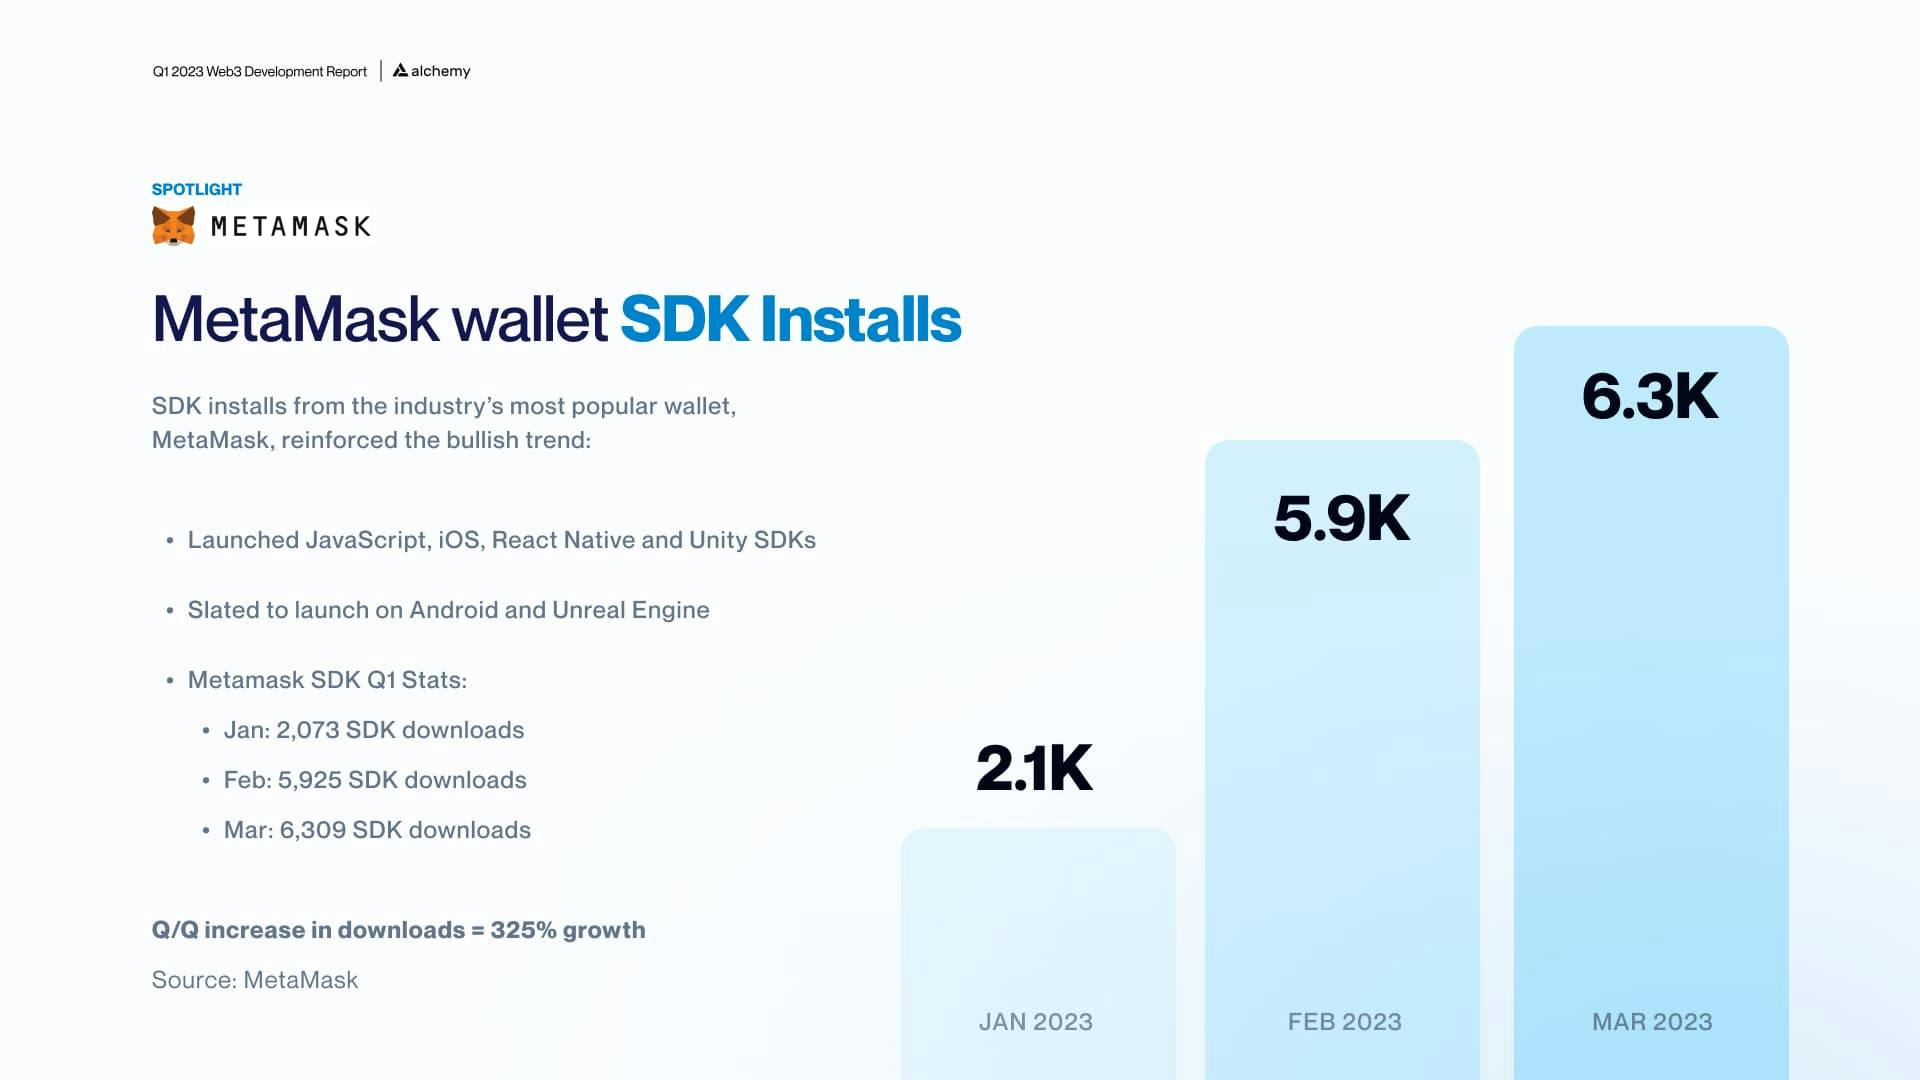 MetaMask SDK installs per month in Q1 2023